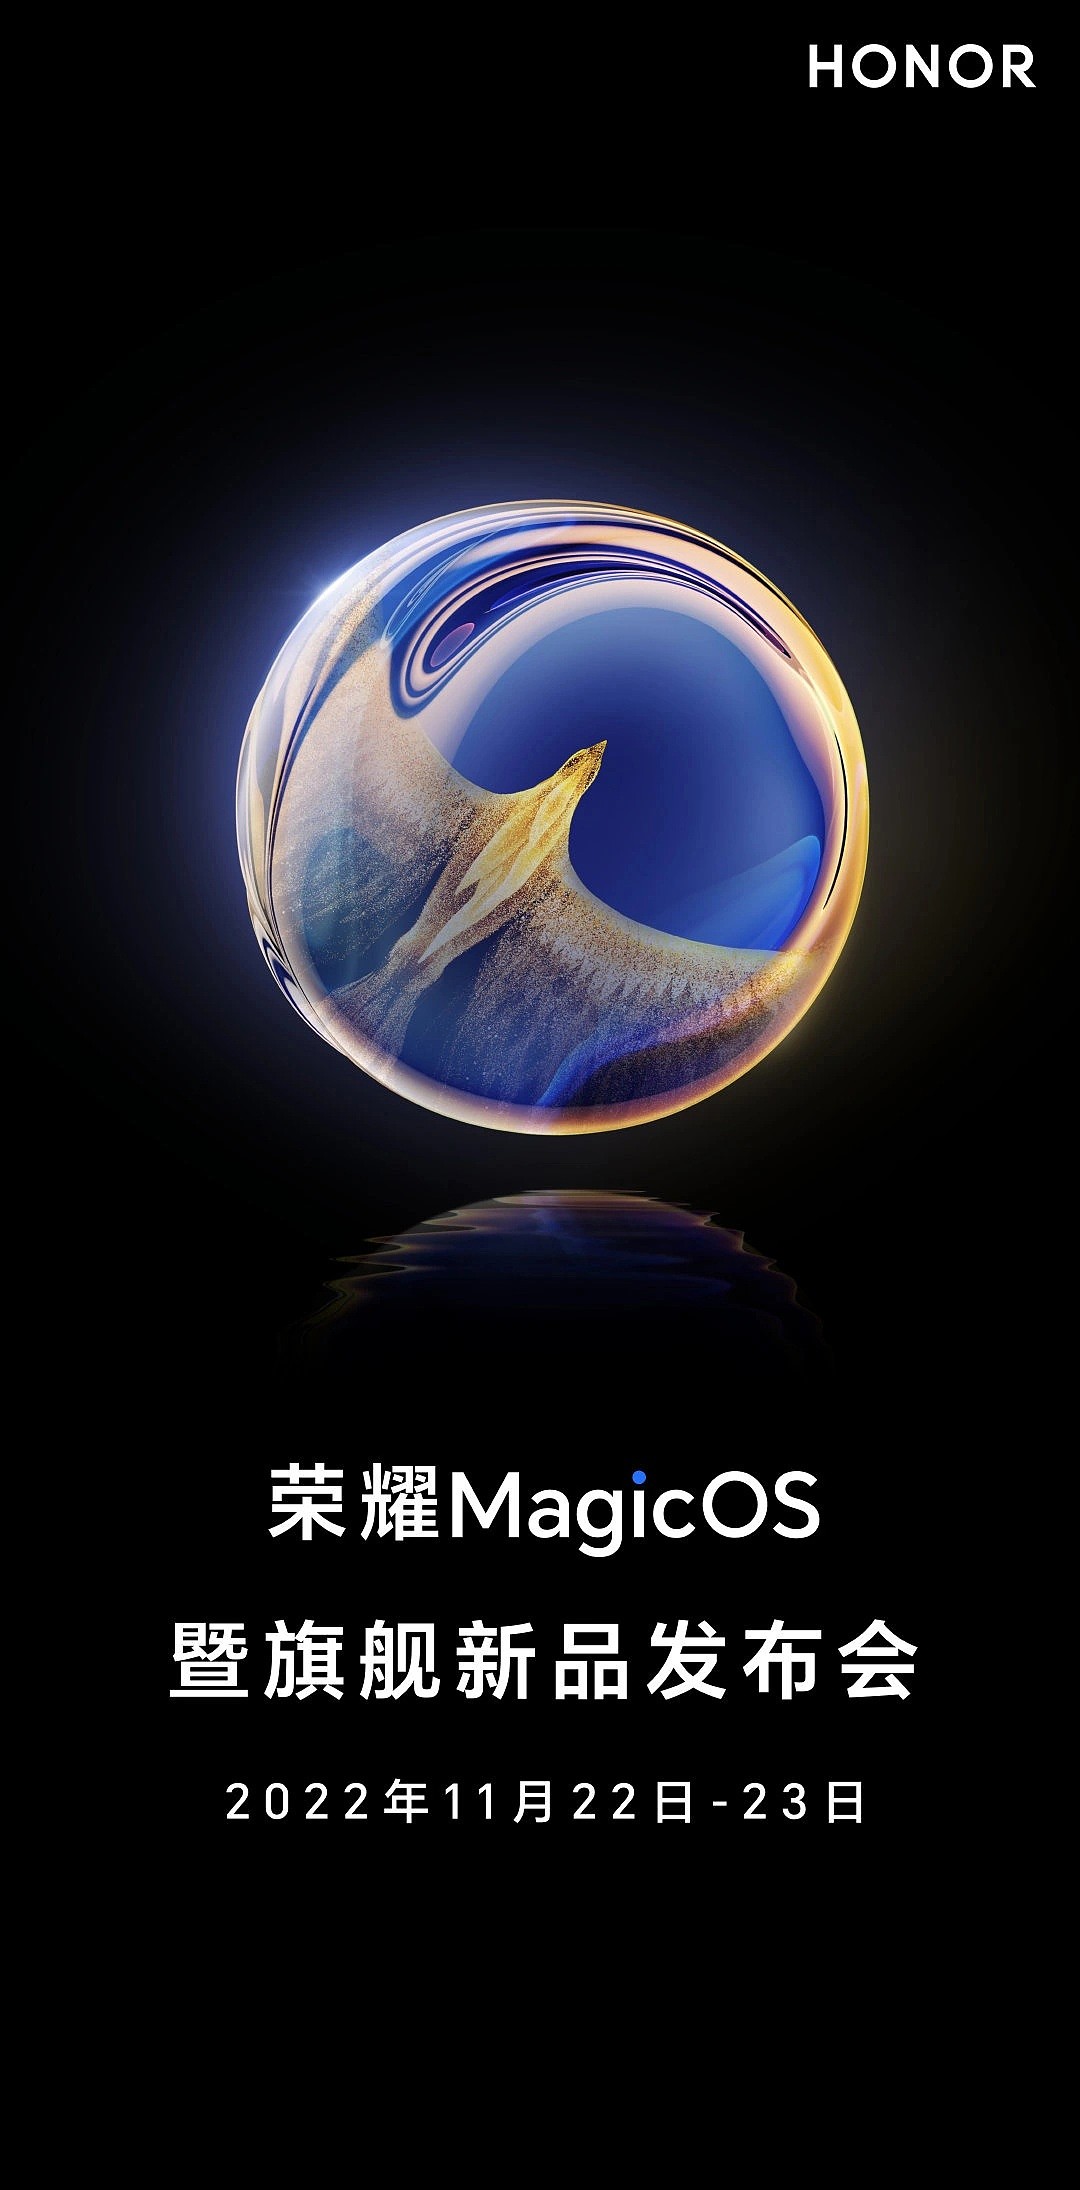 荣耀 V40、Magic3/4 / V 系列手机开启 MagicOS 7.0 内测招募 - 3